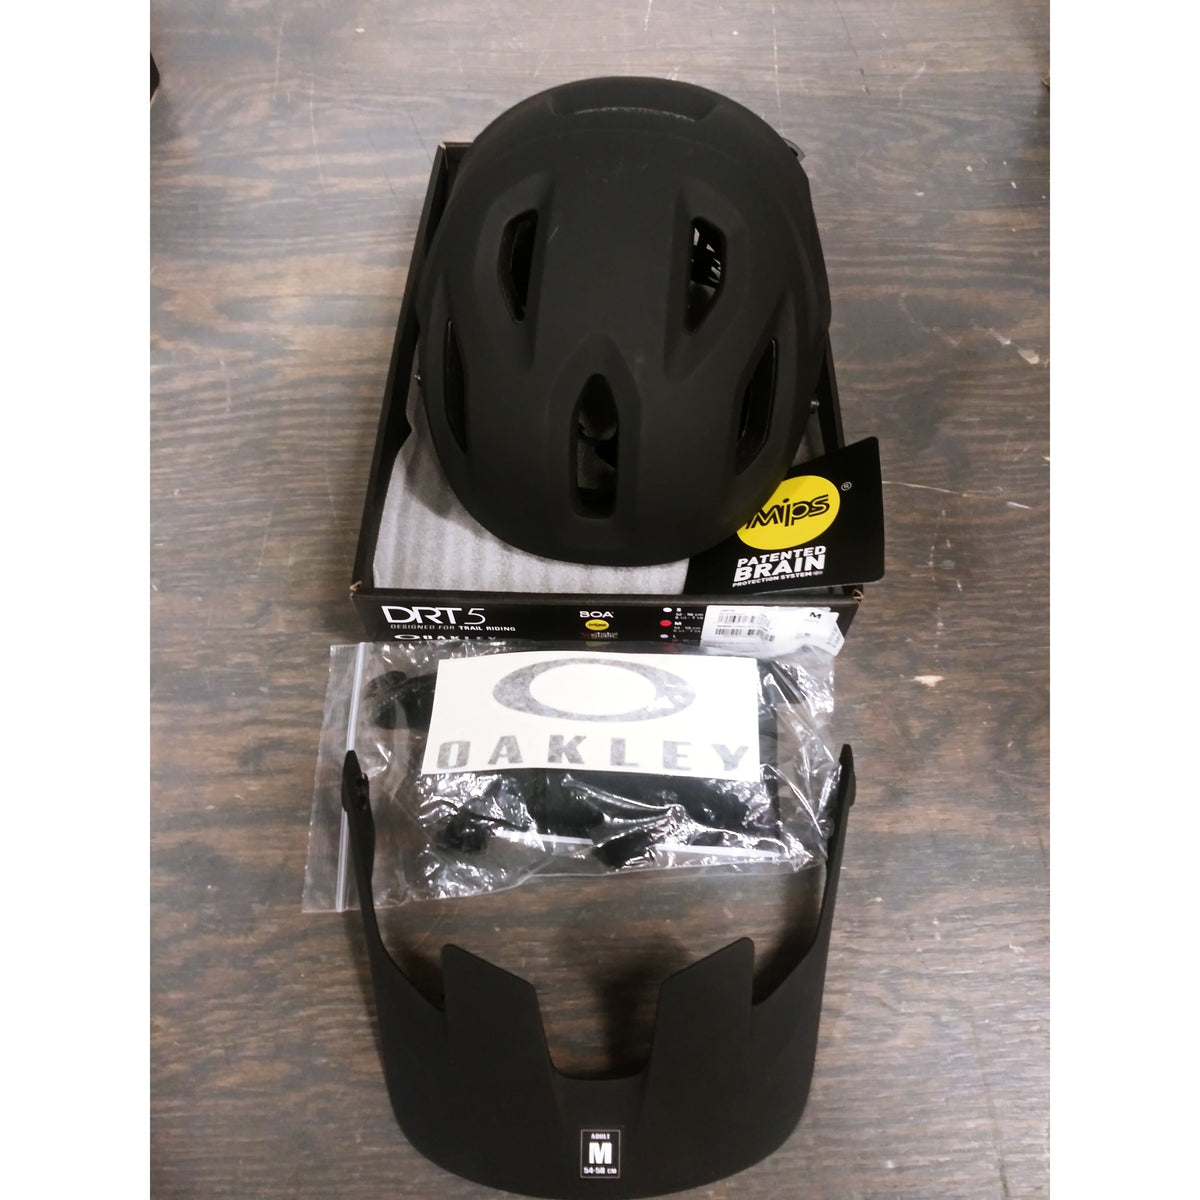 Oakley DRT5 Helmet - Blackout - Medium - Used - Acceptable